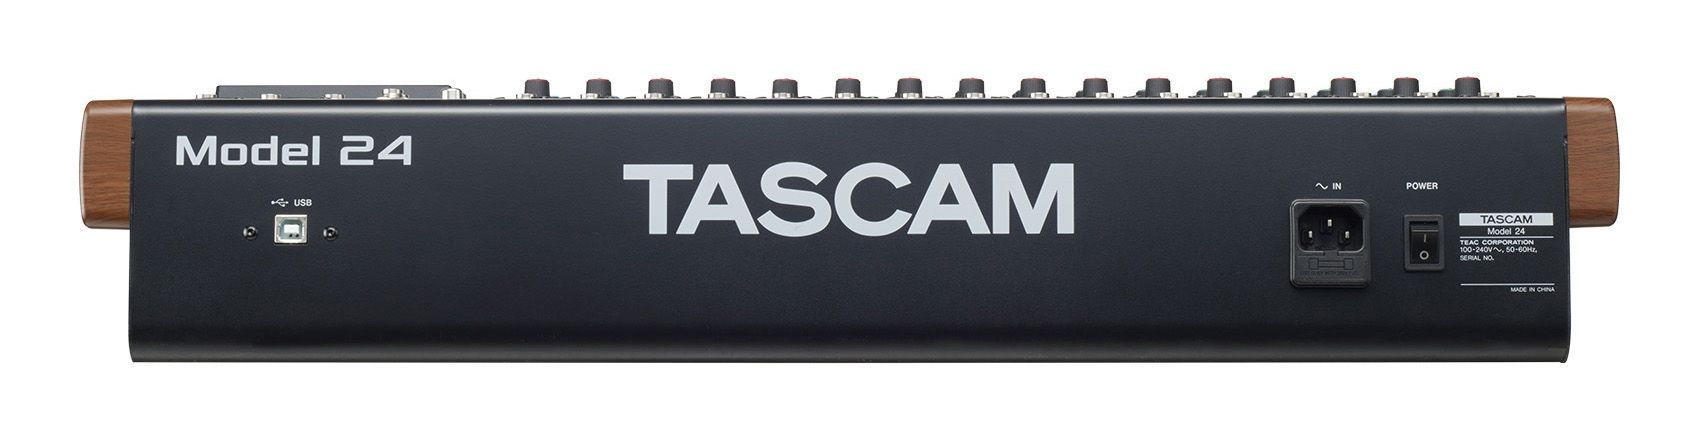 Tascam Model 24 22-Kanal-Analogmischpult mit digitalem 24-Spur-Recorder